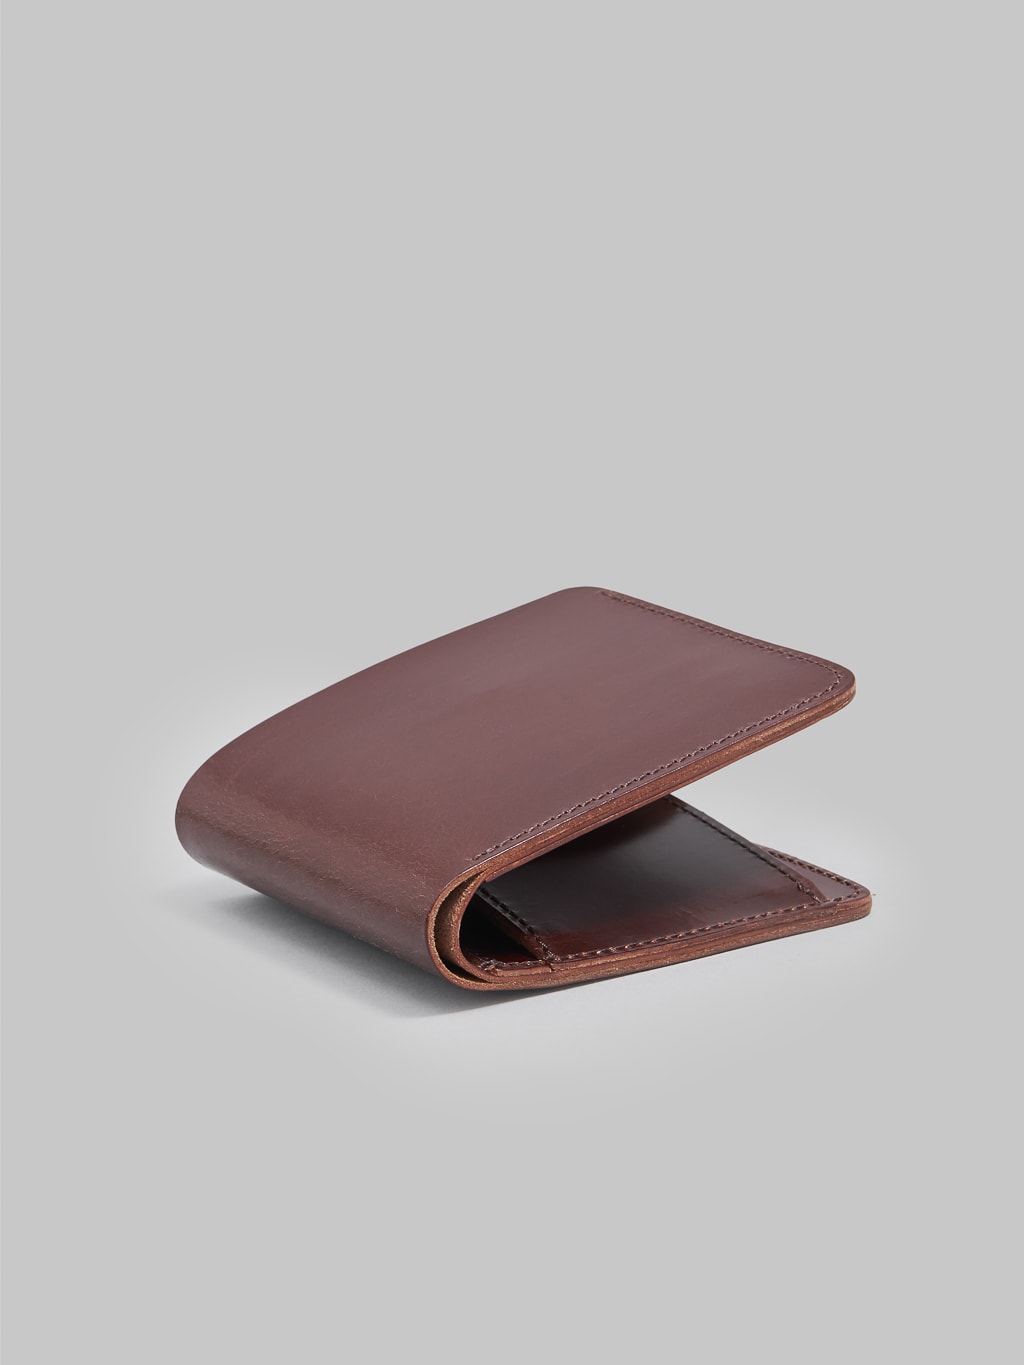 kobashi studio leather fold wallet brown texture